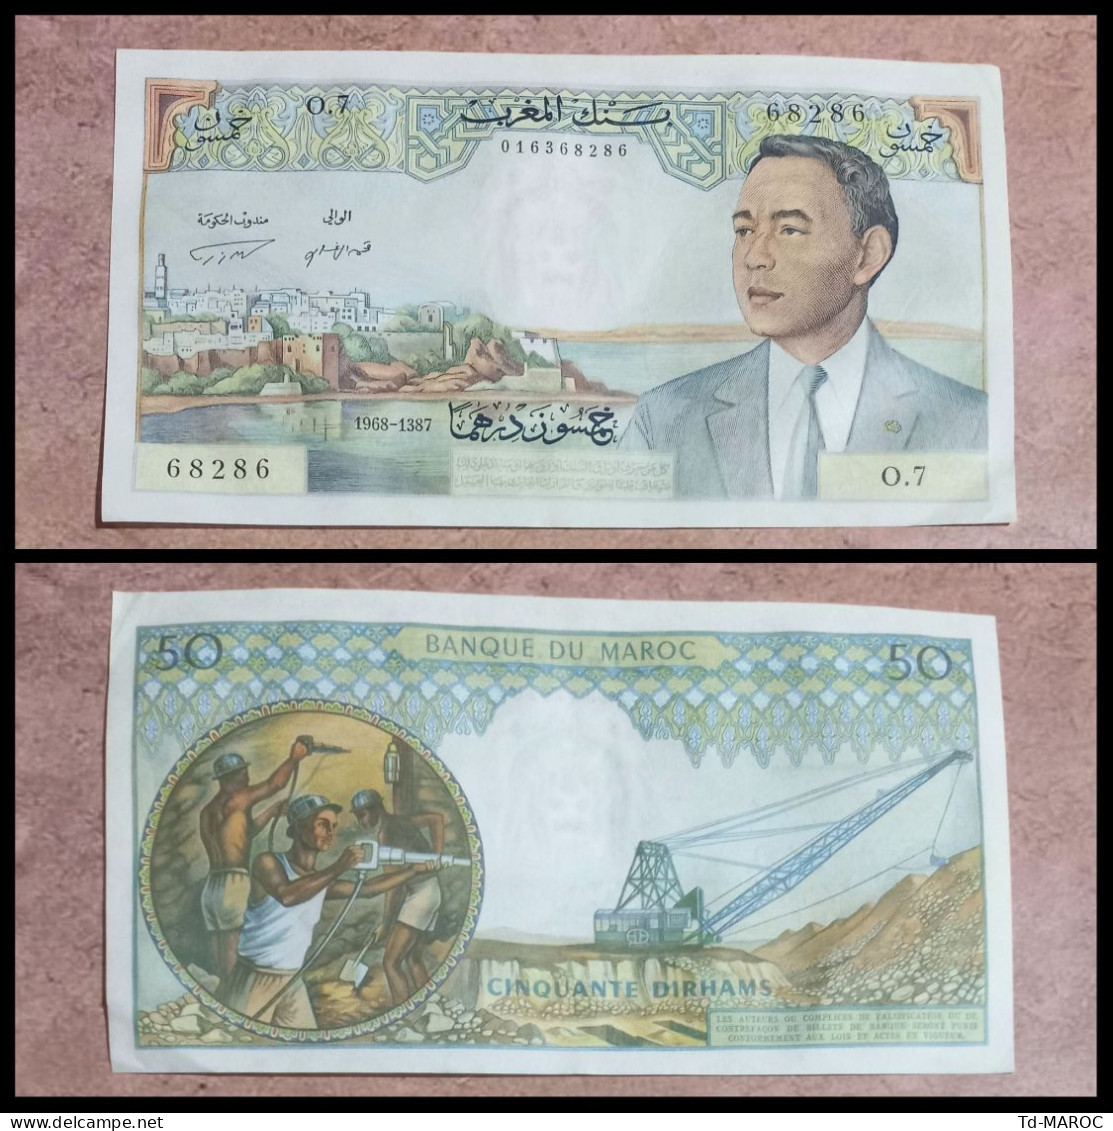 MAROC : Billet De 50 Dirhams 1968 P.55c / Alph.O.7 N° De Série RADAR 68286 - Marokko